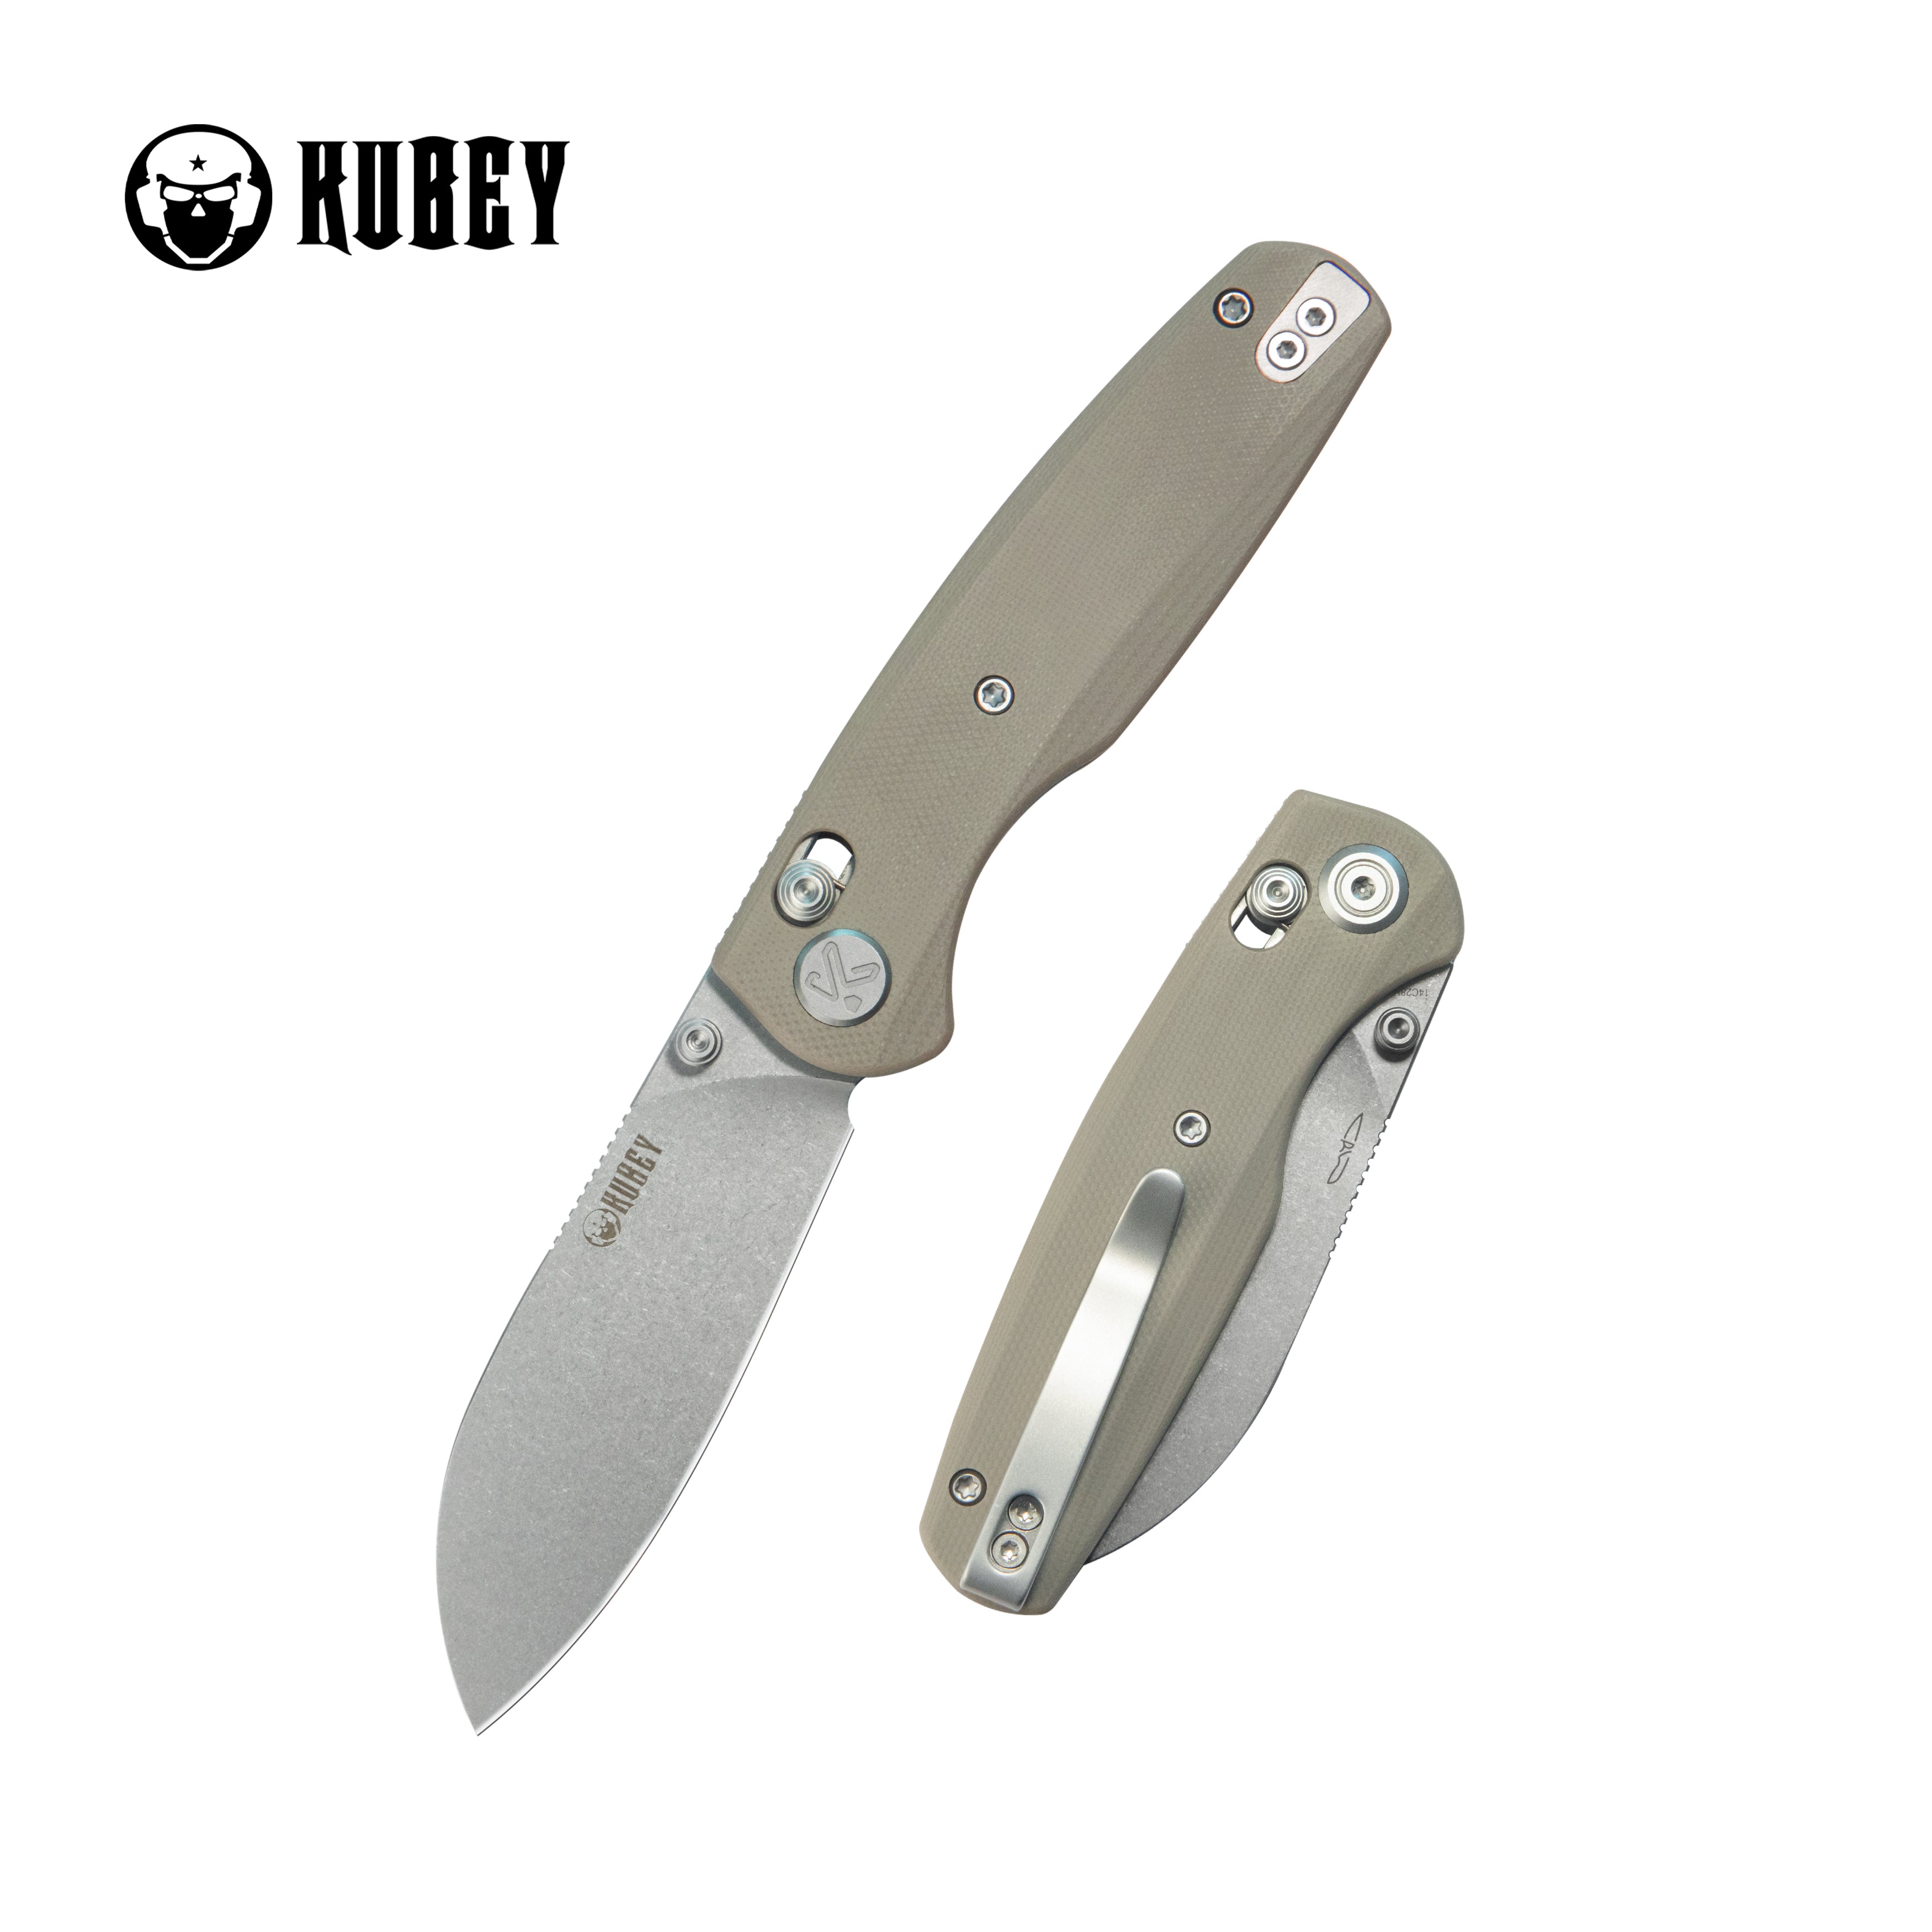 Breeze Every Carry Pocket Knife Crossbar Lock Tan G10 Handle 3.03" Stonewash 14C28N Blade KU288C